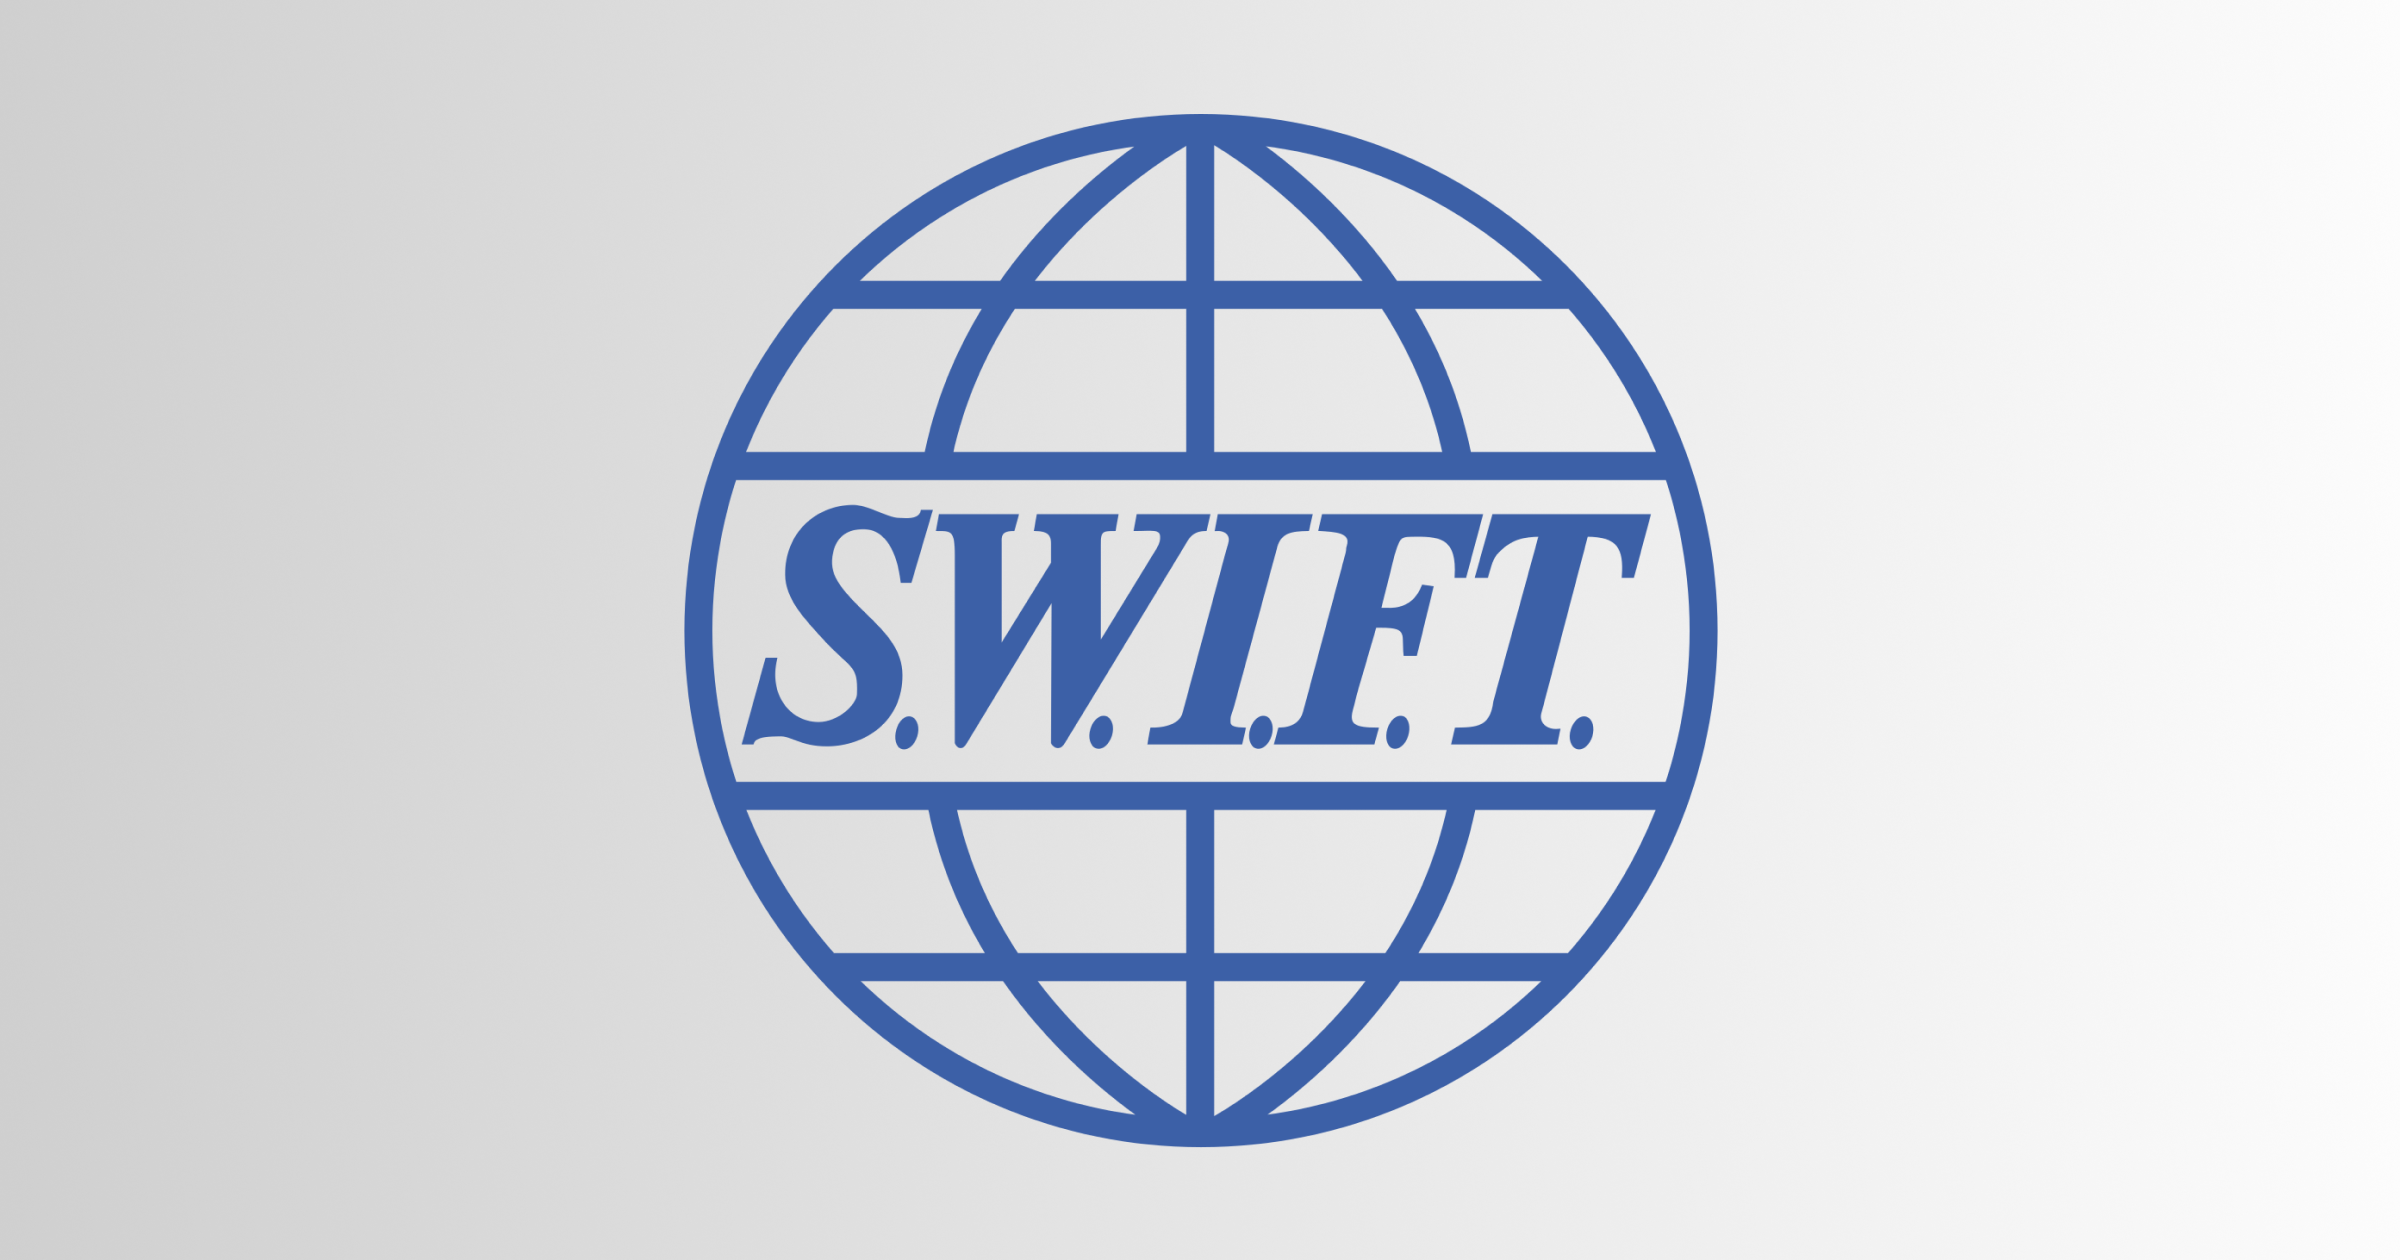 Swift logo - crypto mass adoption